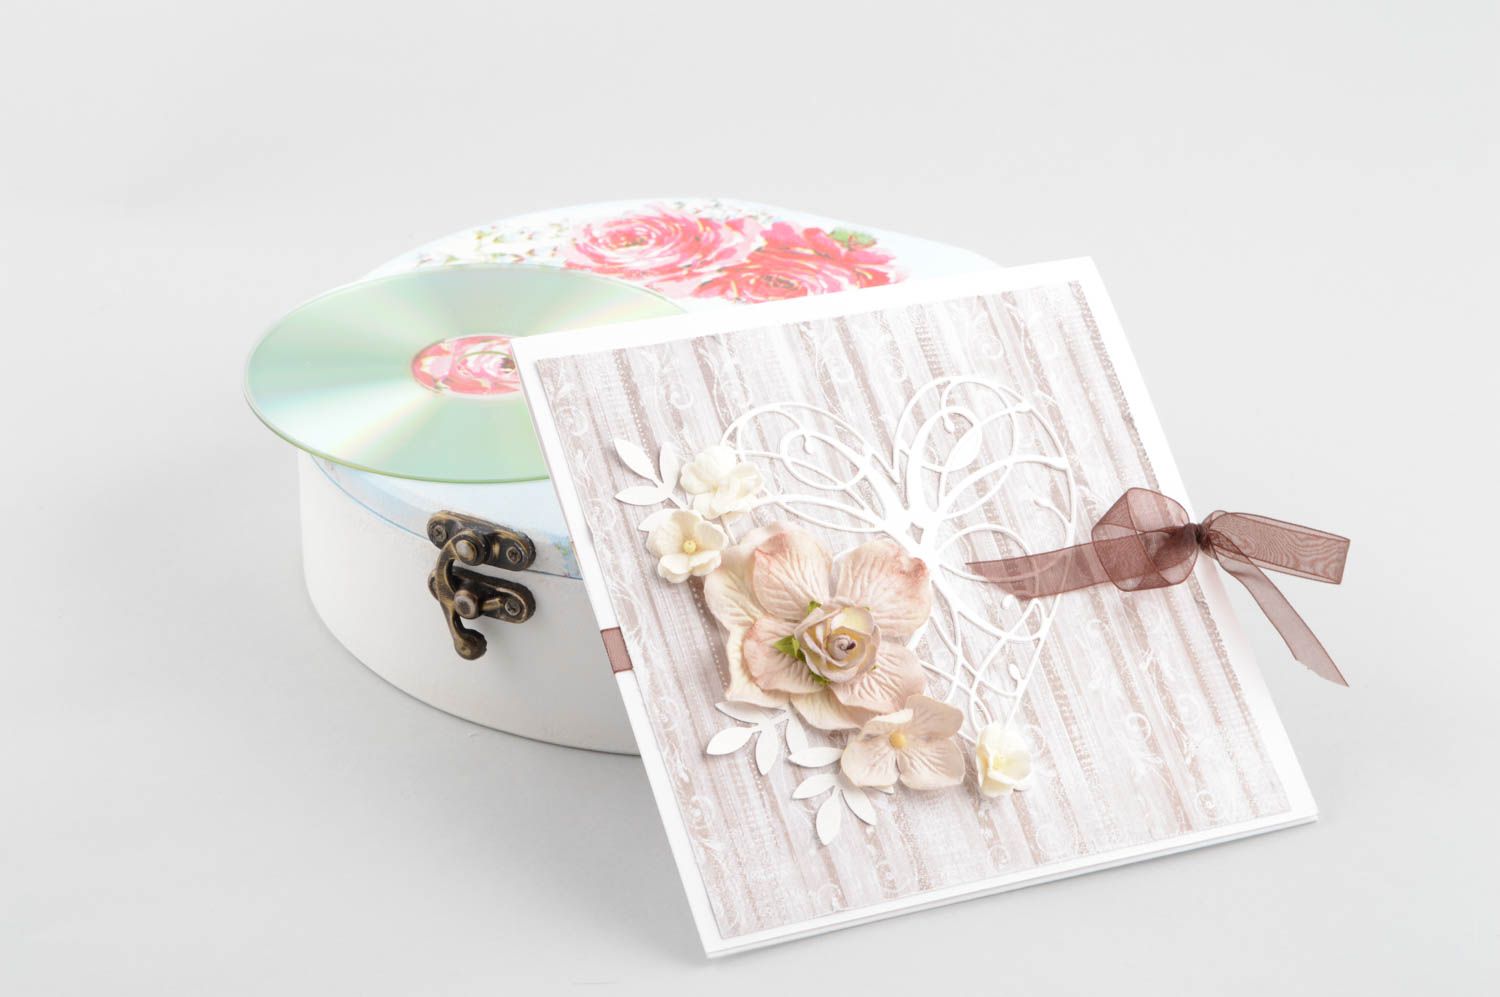 Handmade CD Hülle aus Papier kreatives Geschenk CD Aufbewahrung mit Blumen foto 1